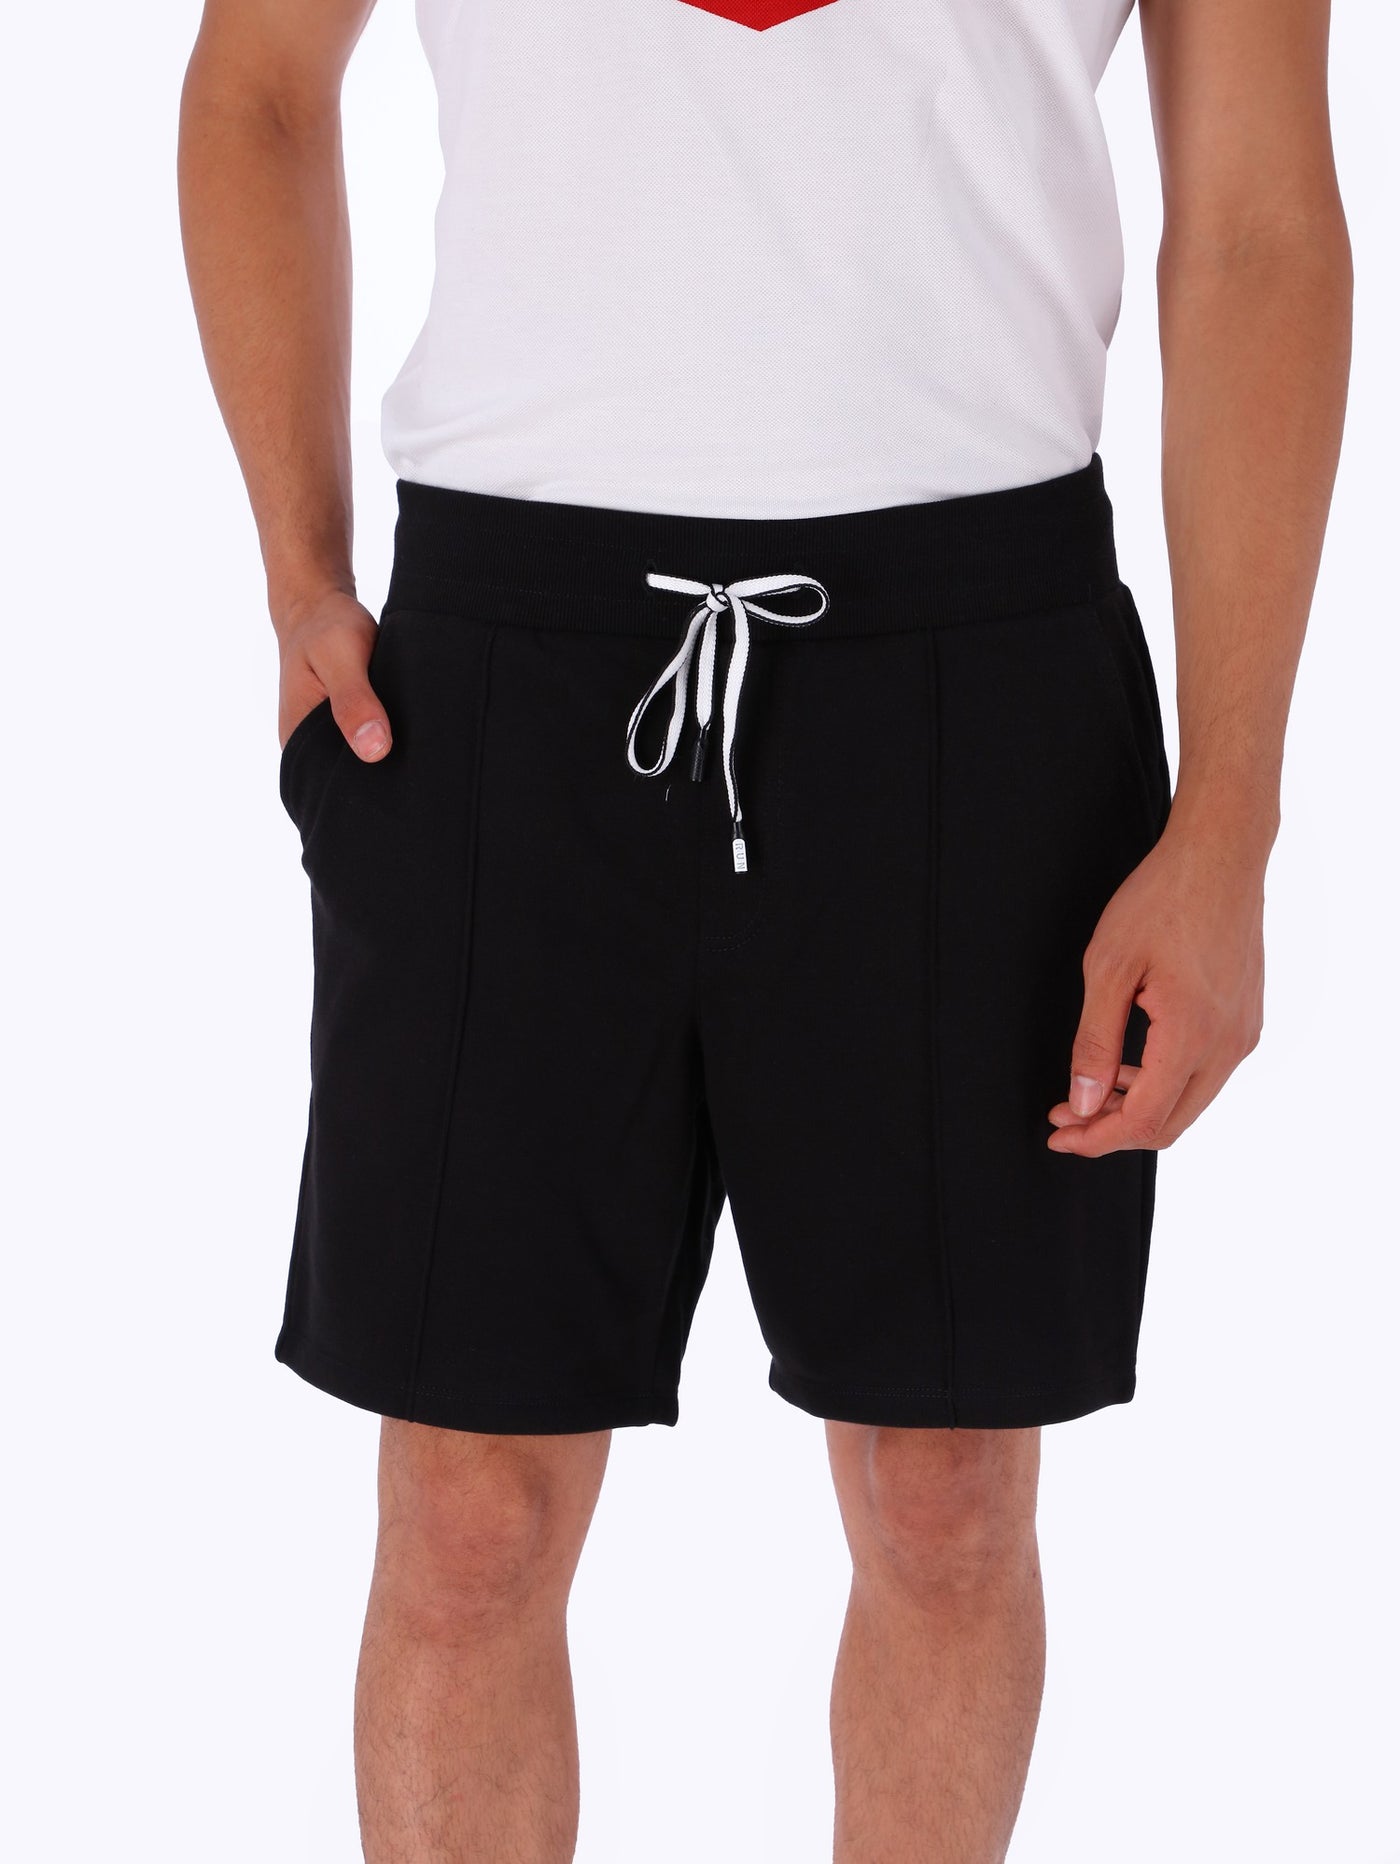 OR Men's Fleece Drawstring Shorts